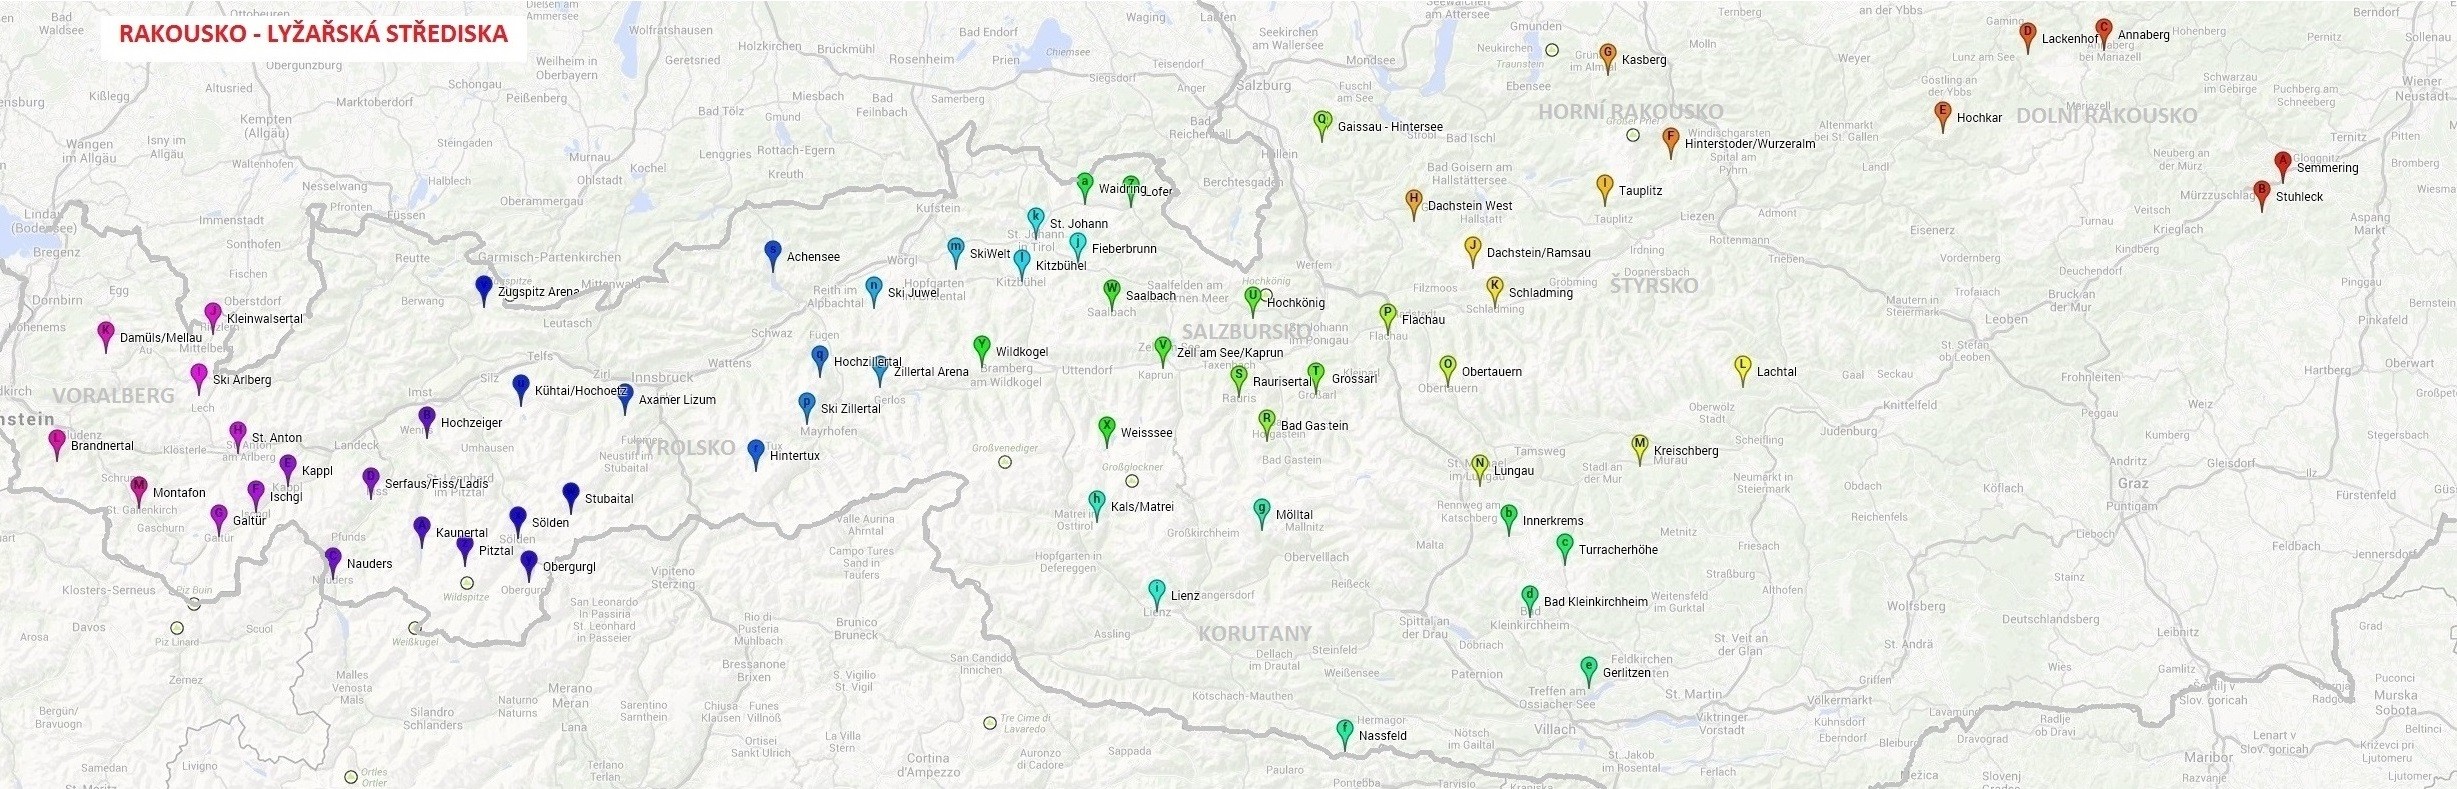 rakouská střediska mapa Rakousko   mapa lyžařských středisek | Turistika.cz rakouská střediska mapa